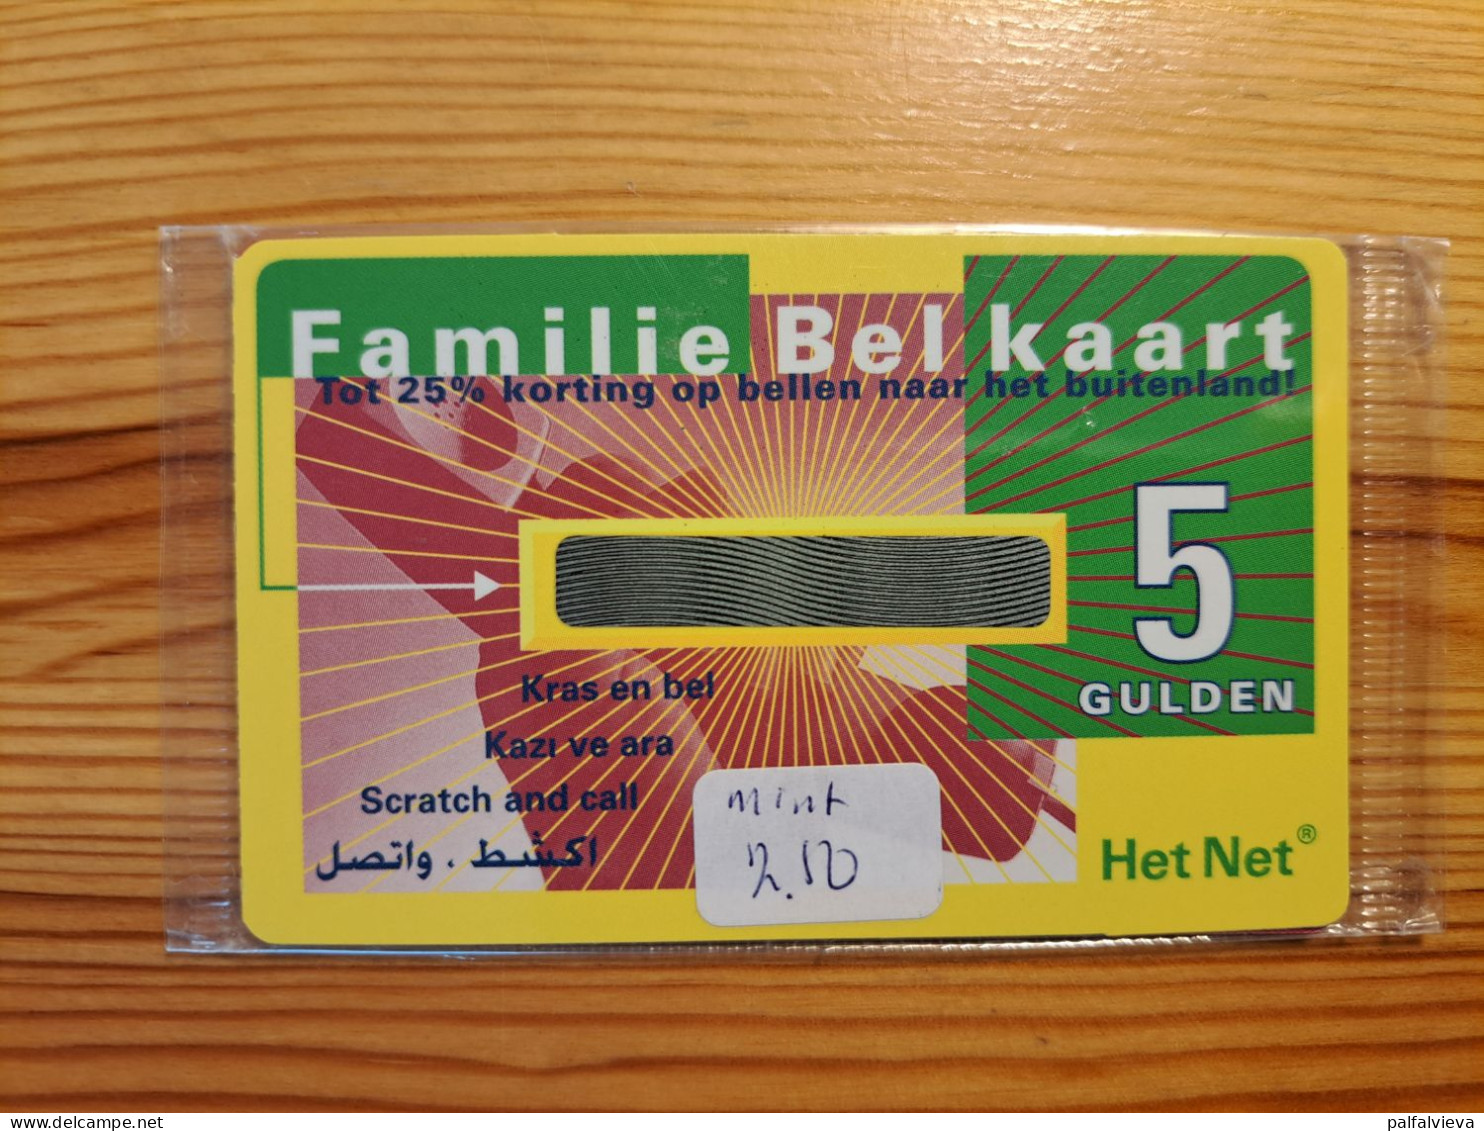 Prepaid Phonecard Netherlands, Kpn Telecom - Familie Belkaart - Mint In Blister - [3] Handy-, Prepaid- U. Aufladkarten